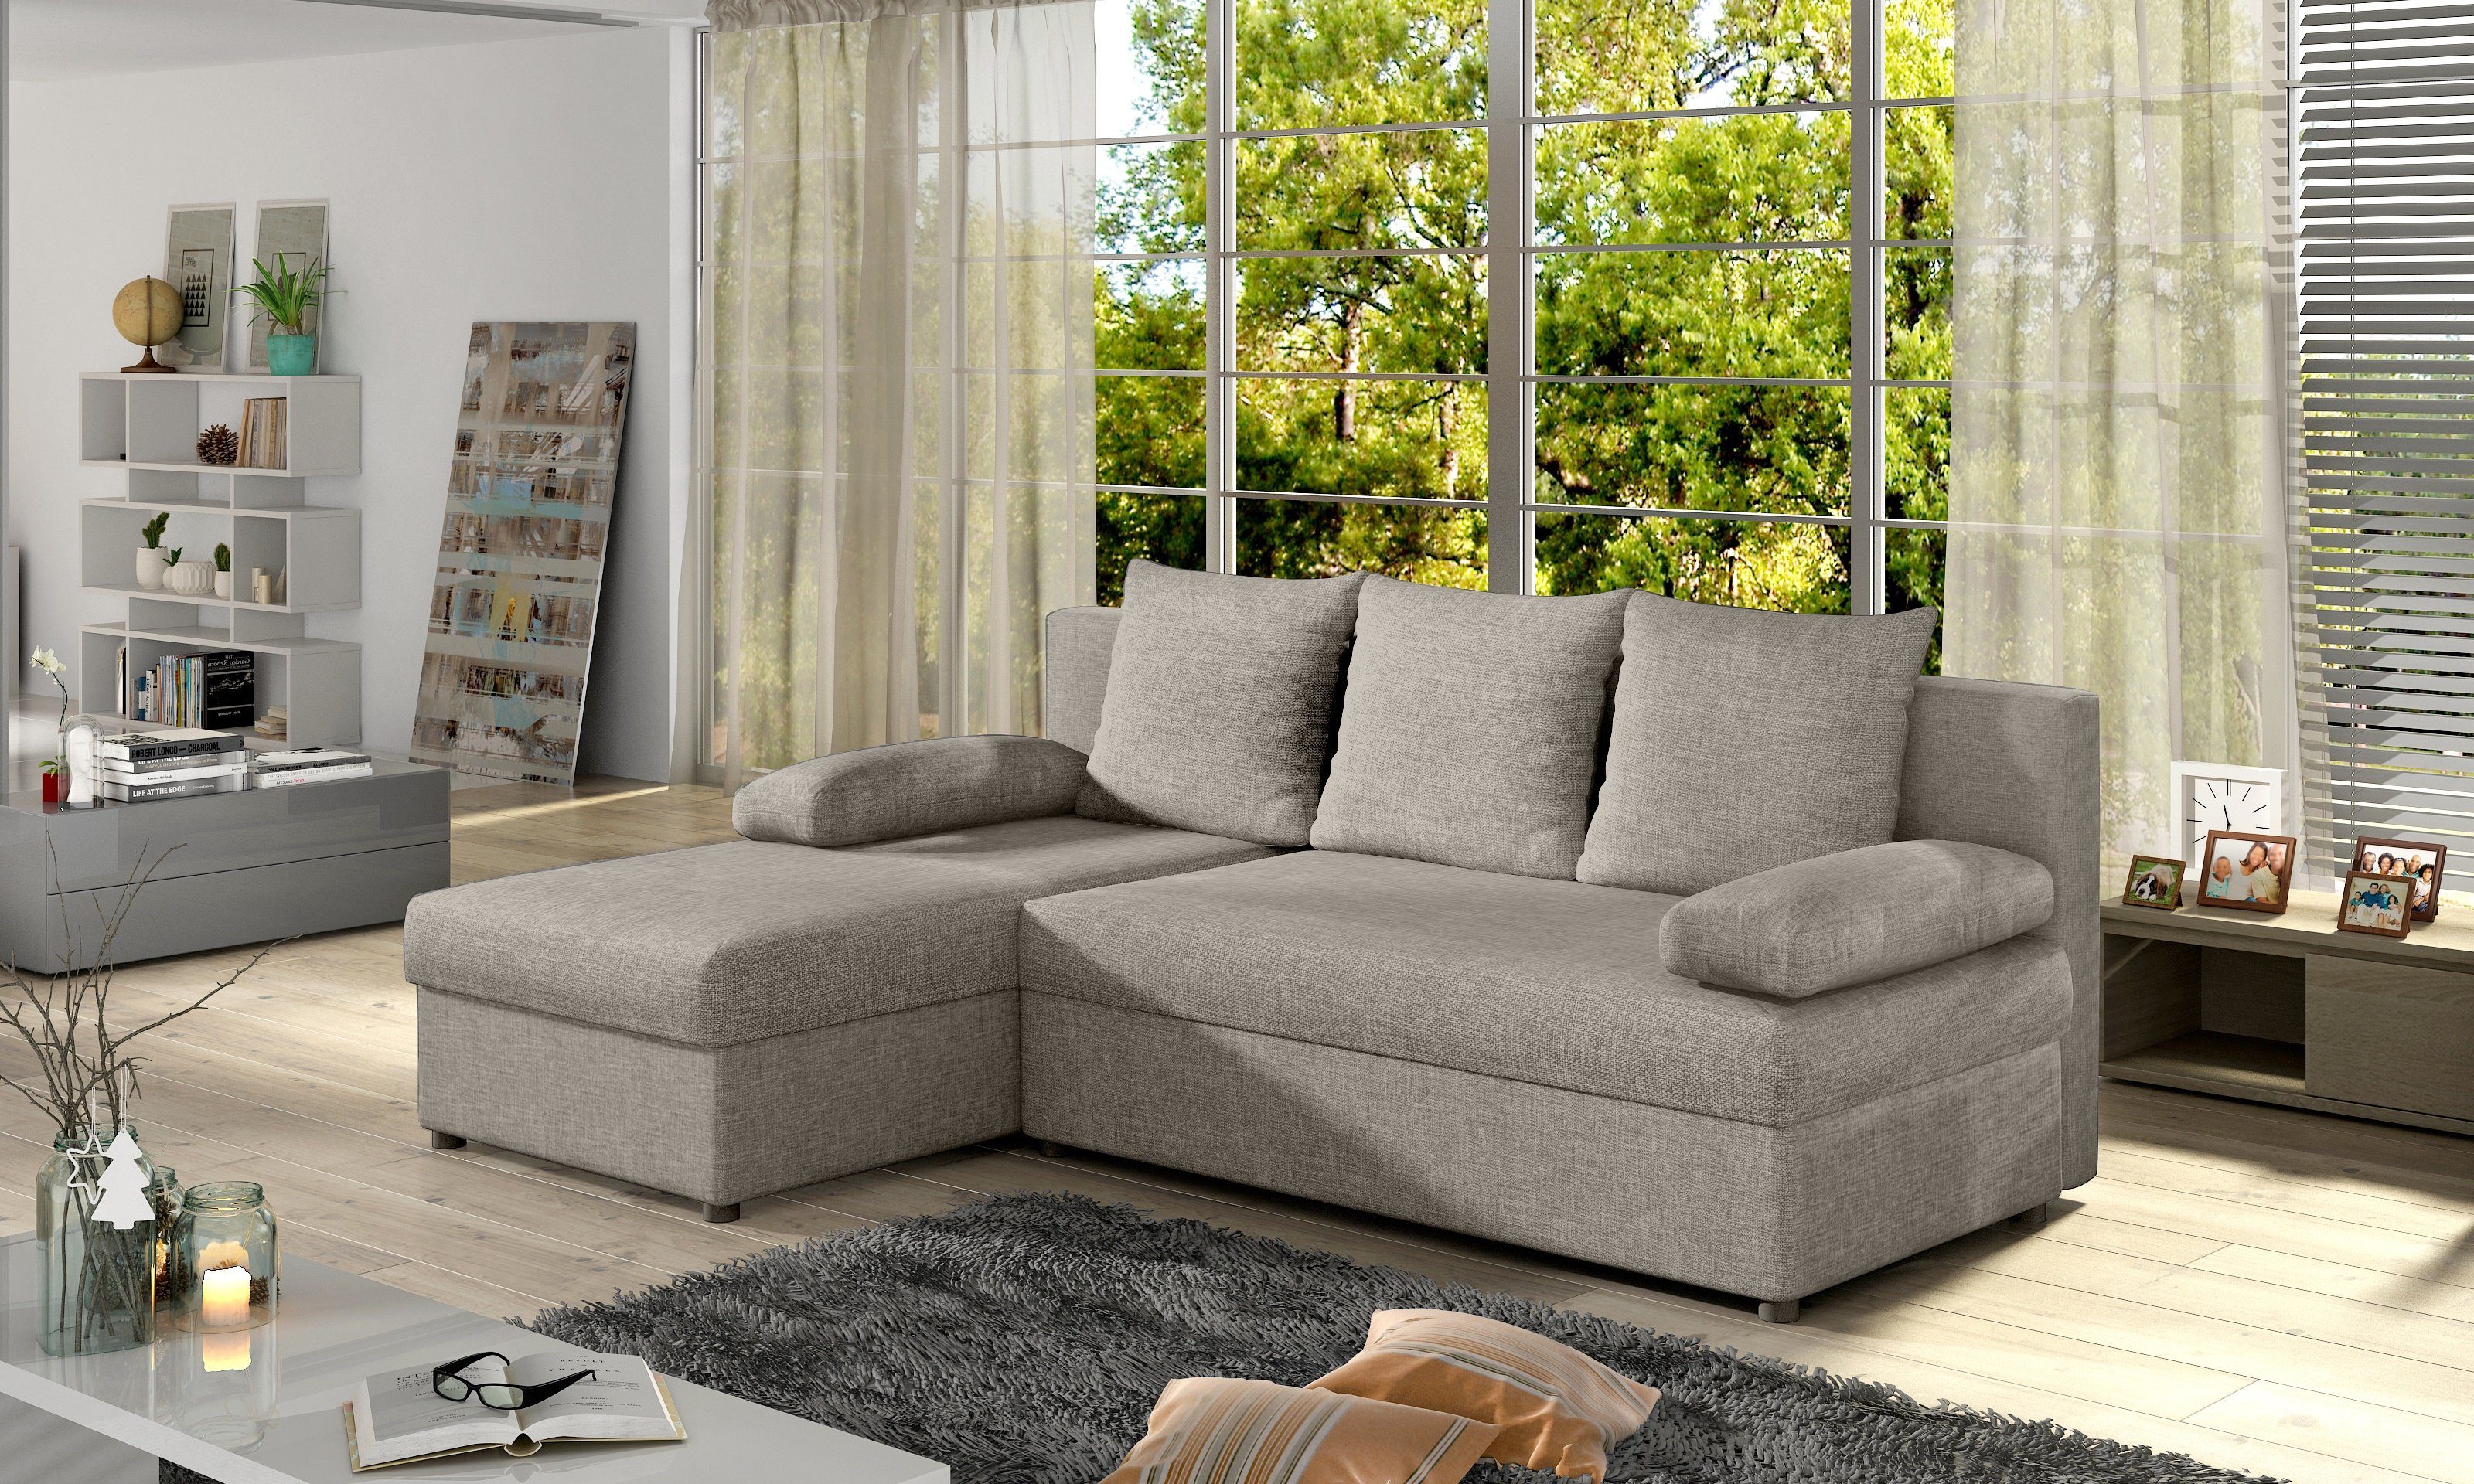 JVmoebel Ecksofa, Design LForm Sofa Couch Polster Schlafsofa Textil Bettfunktion